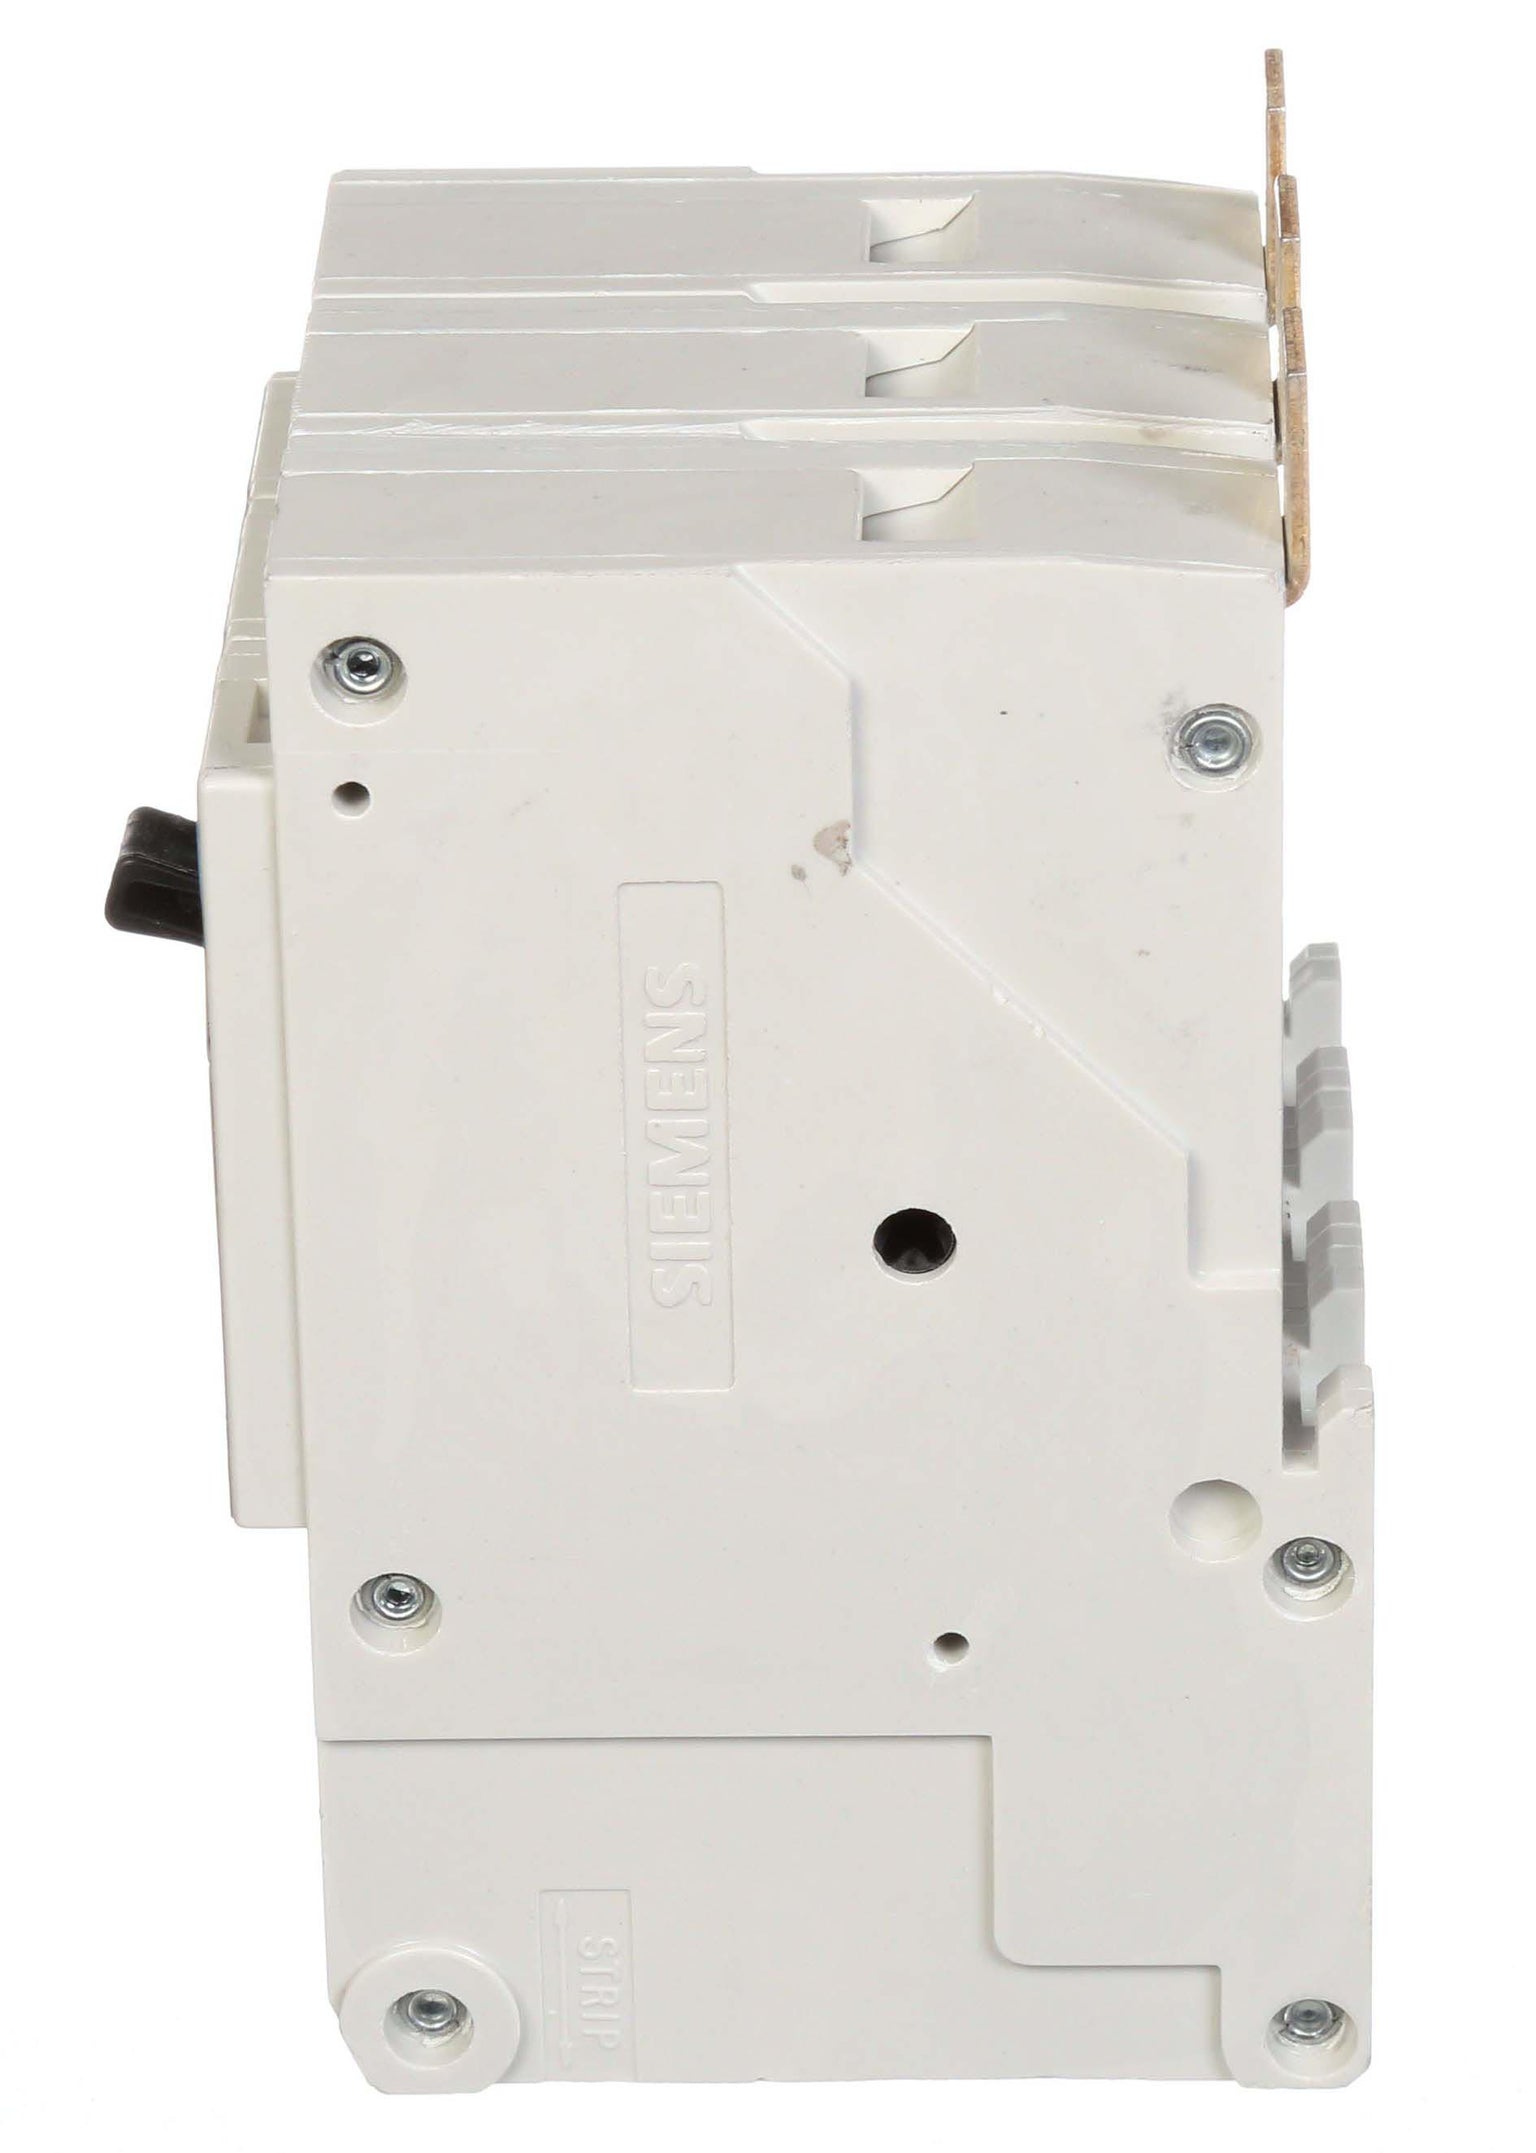 NGB3B070B - Siemens - Molded Case Circuit Breaker